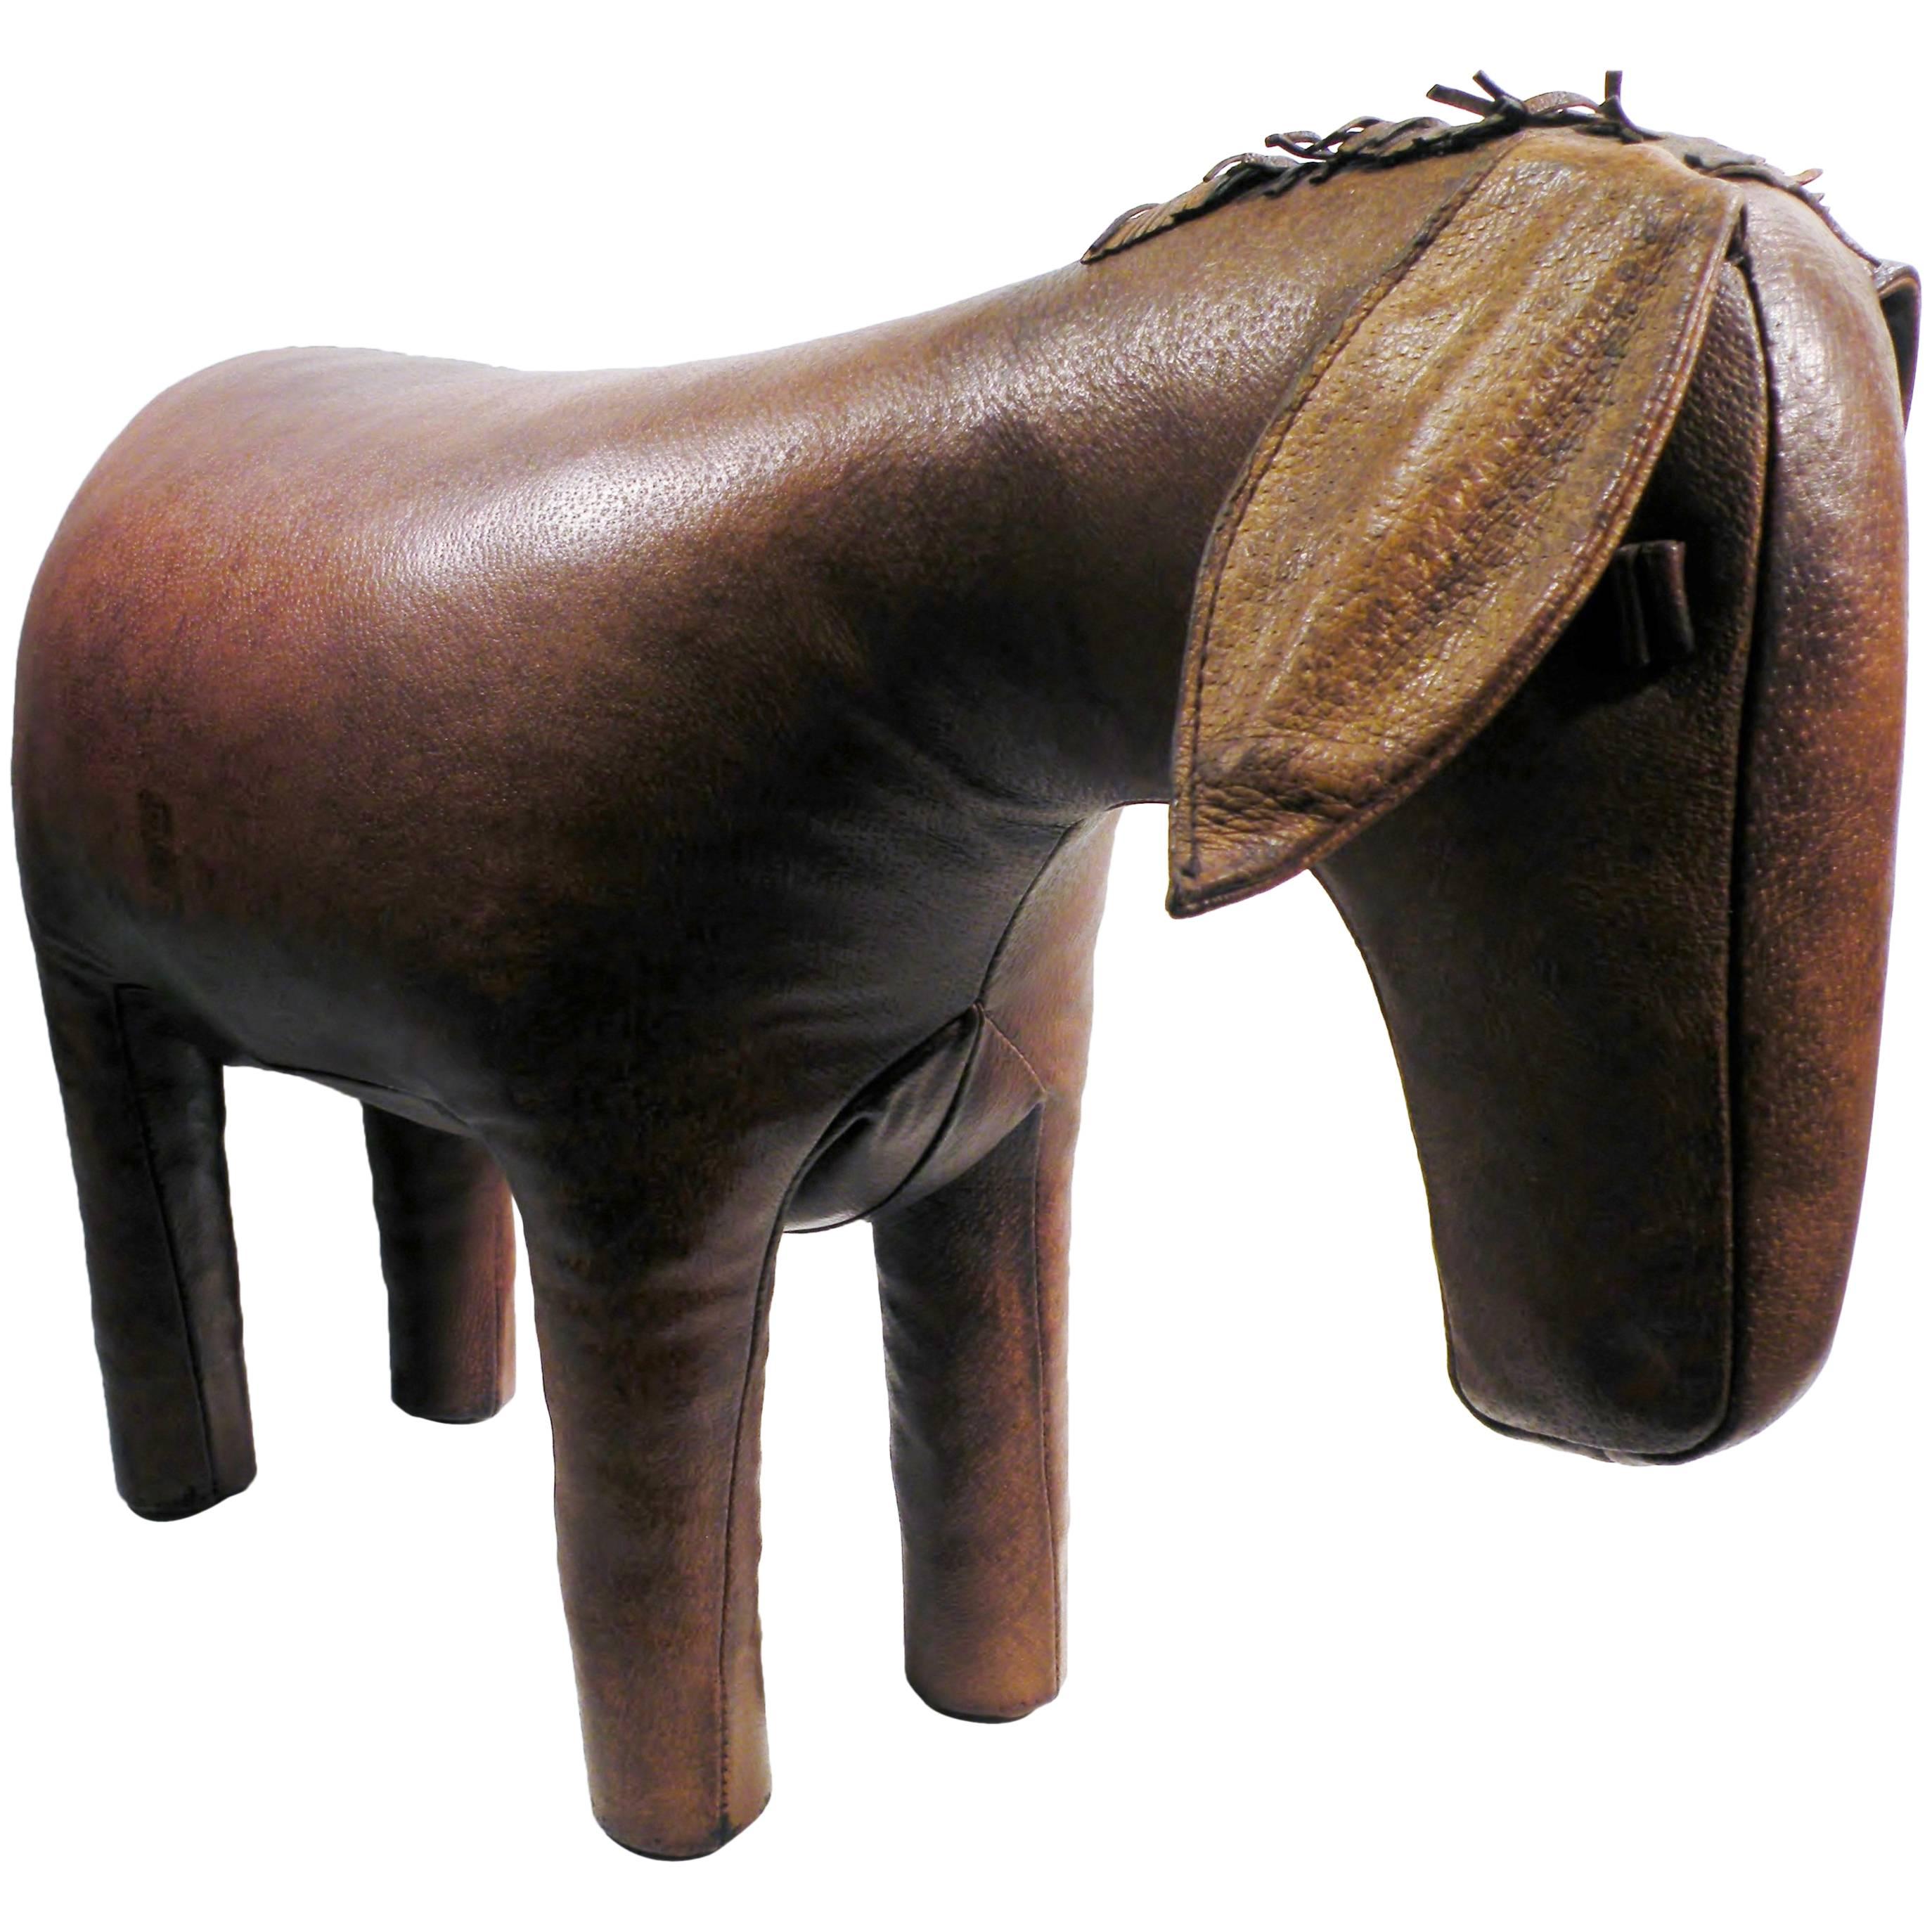 Dimitri Omersa Leather Donkey Ottoman Footstool Abercrombie & Fitch